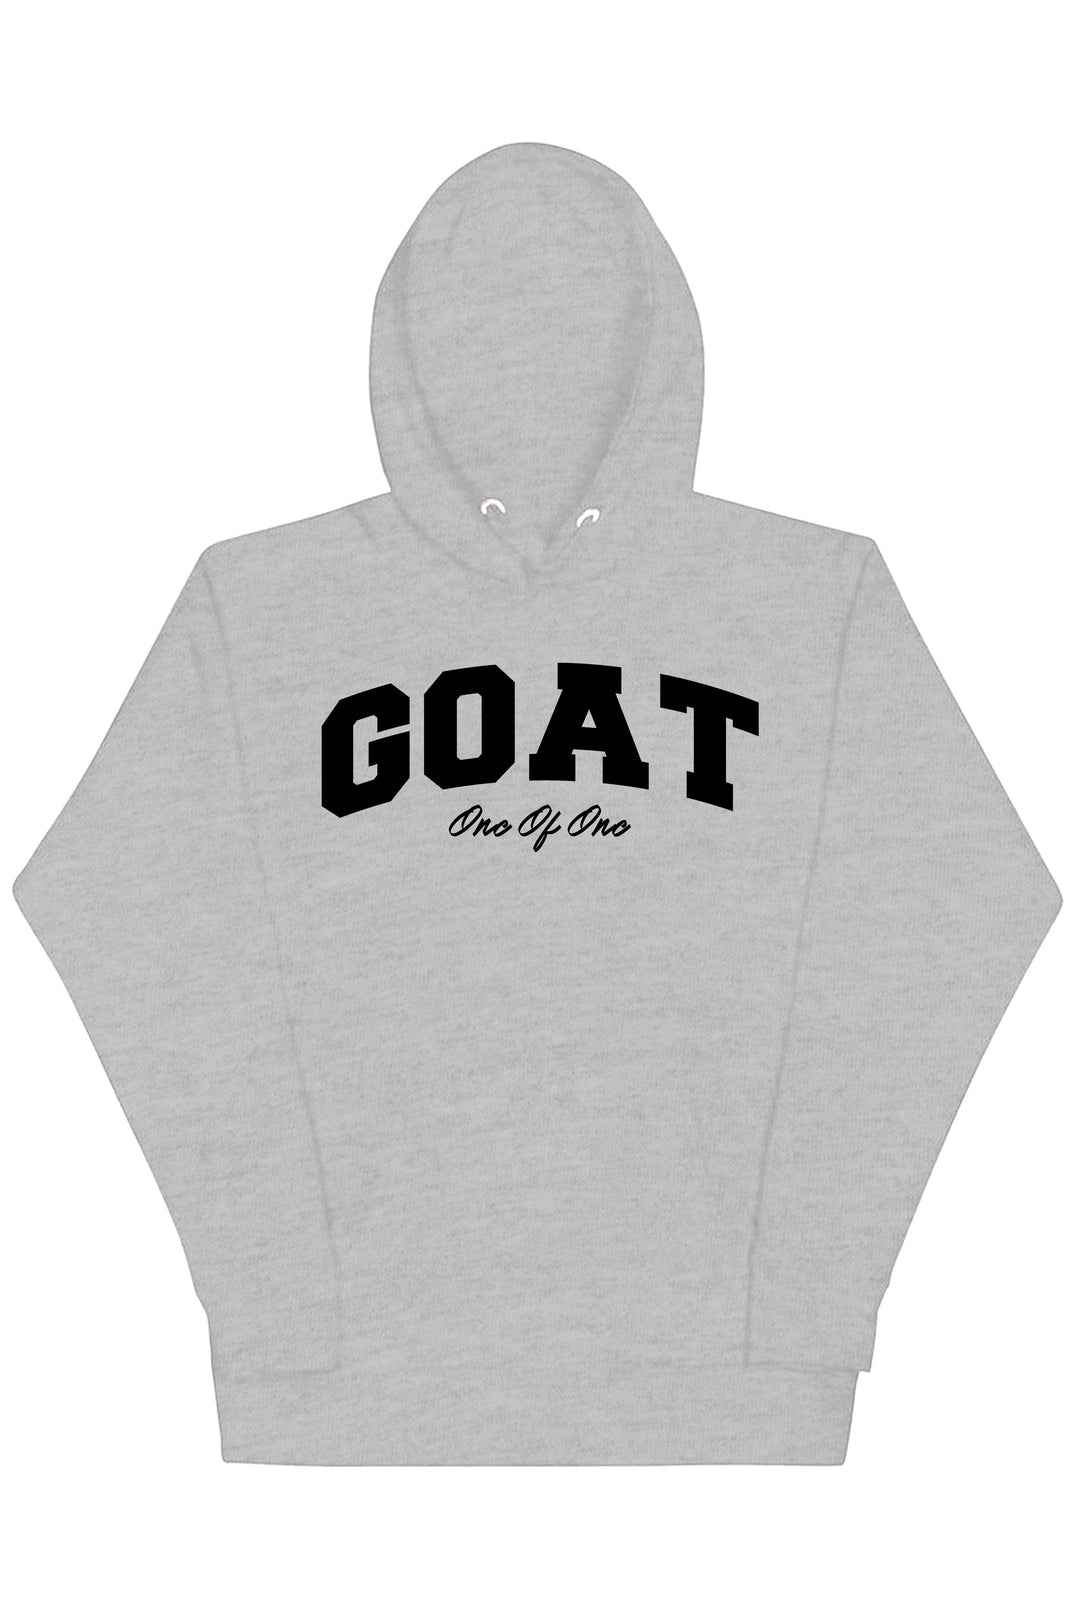 Goat Hoodie (Black Logo) - Zamage